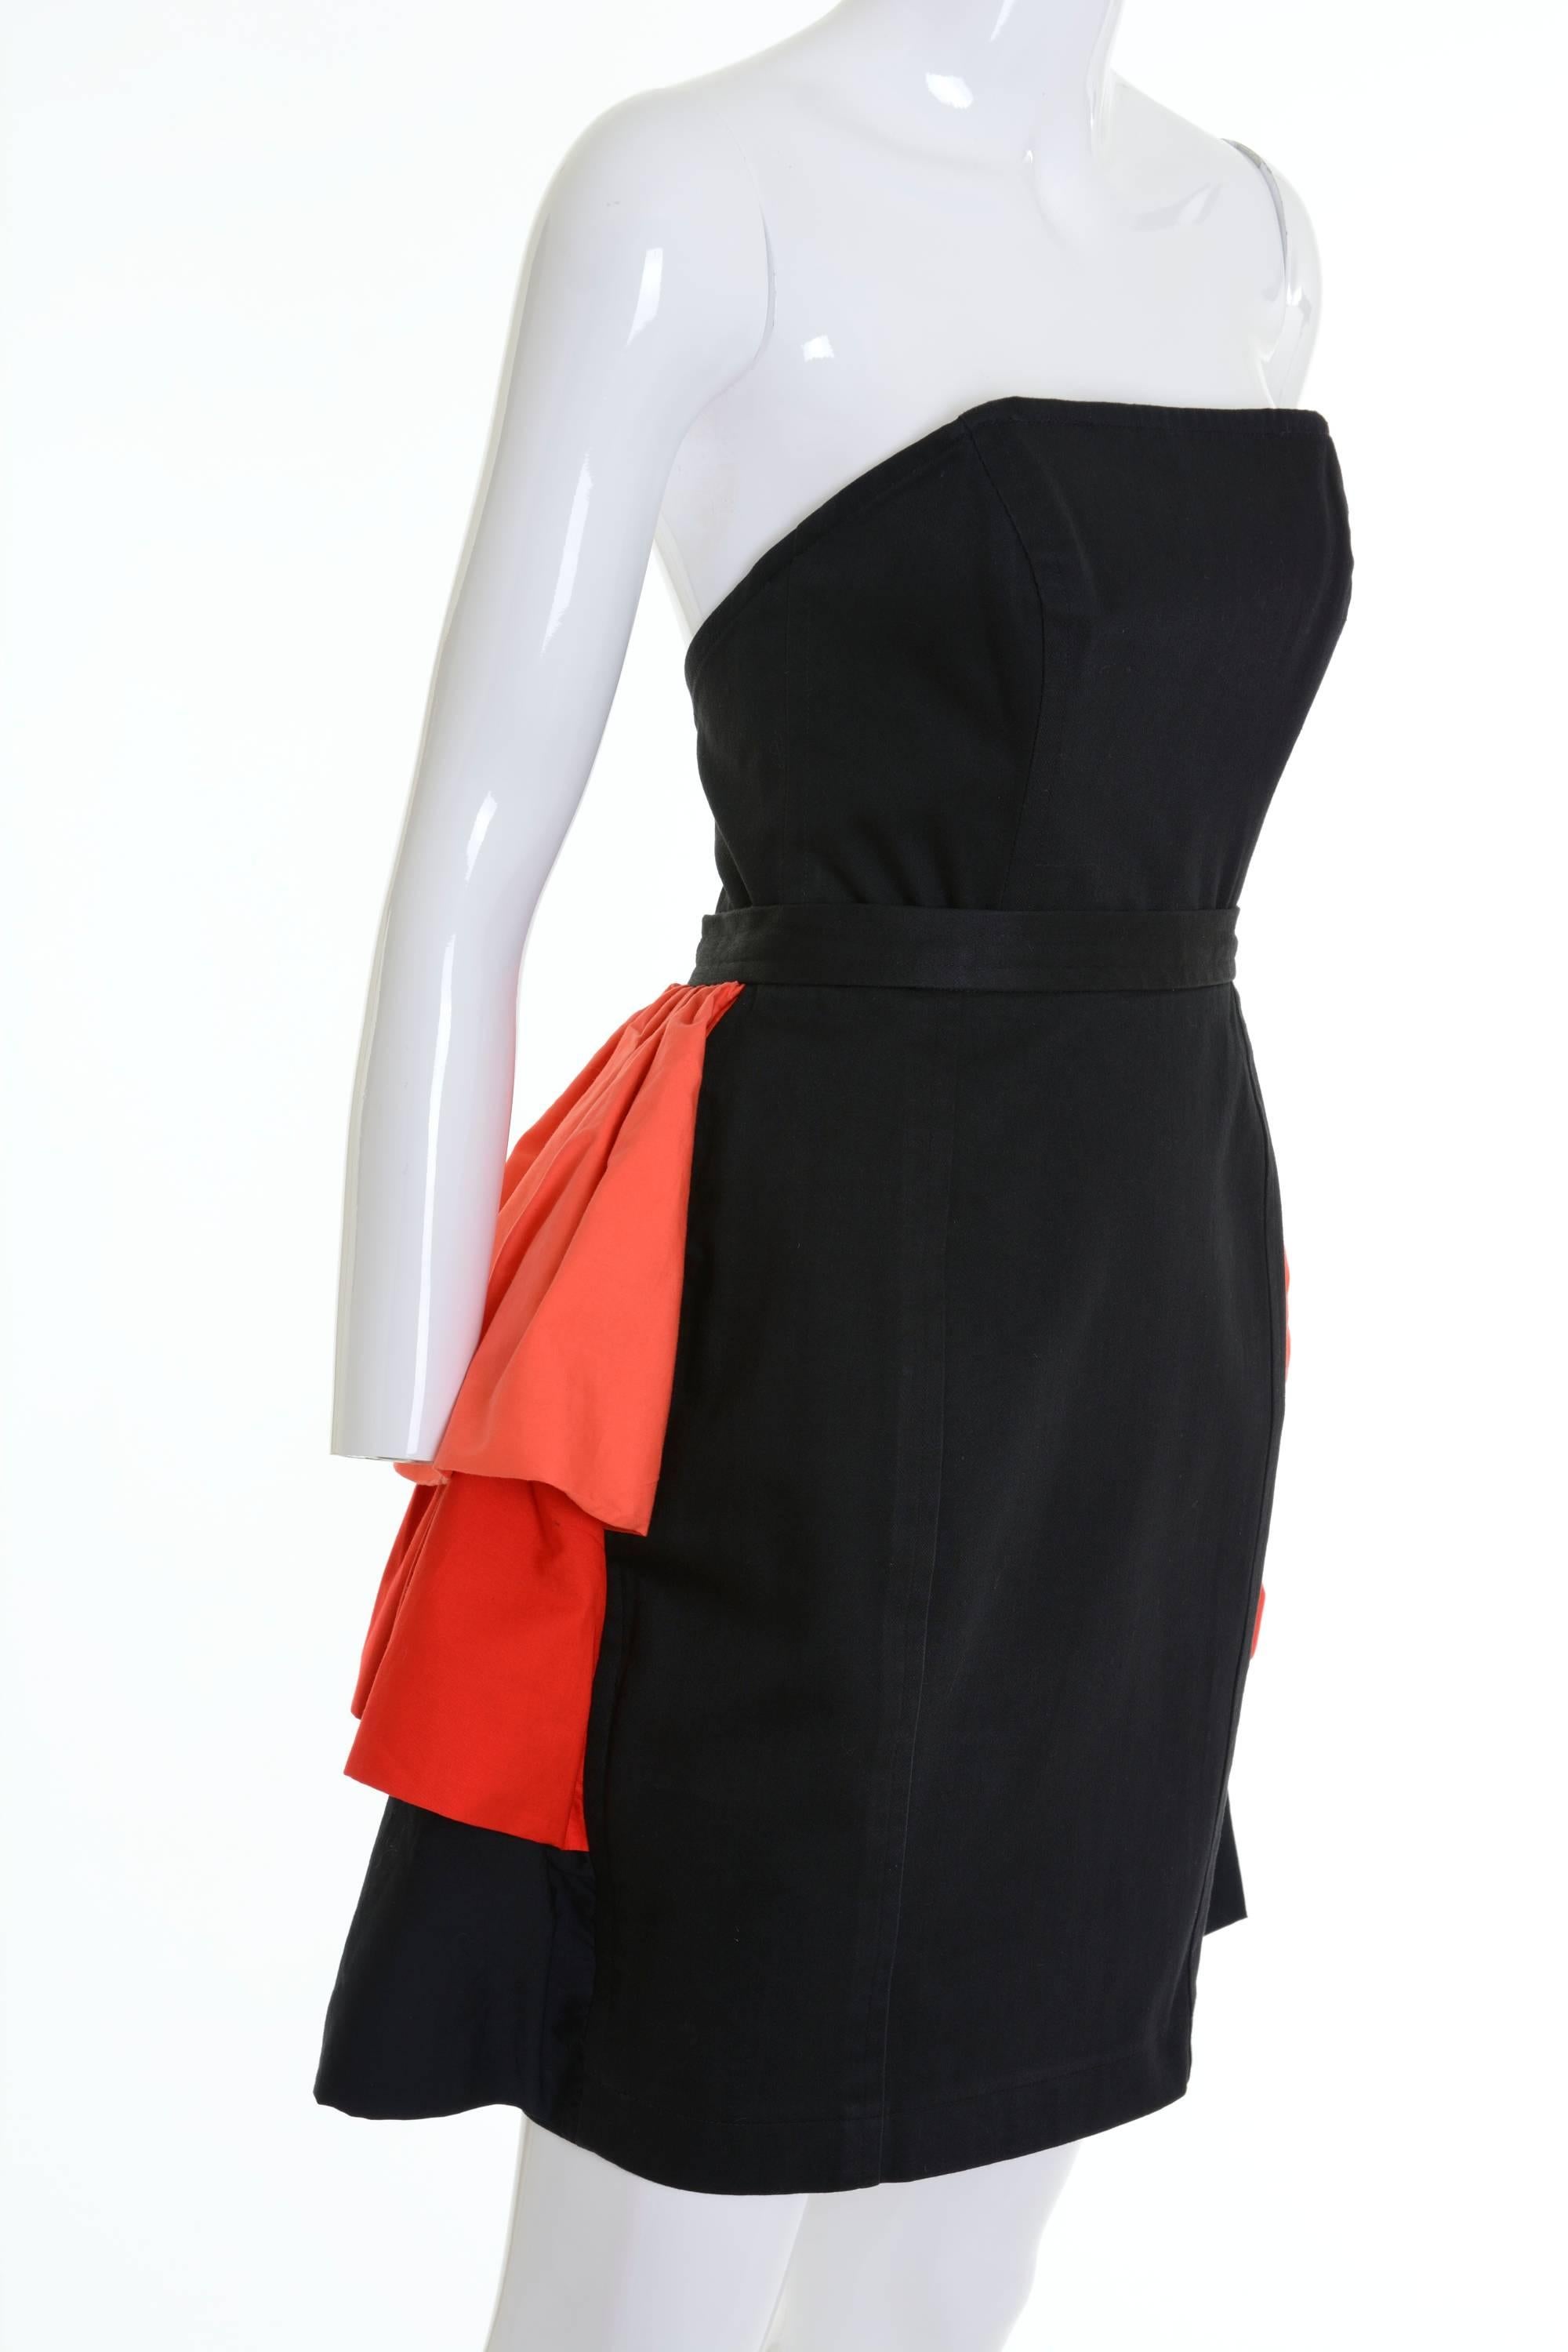 Women's 1980s YVES SAINT LAURENT Rive Gauche Black and Orange Flounced Suit Skirt